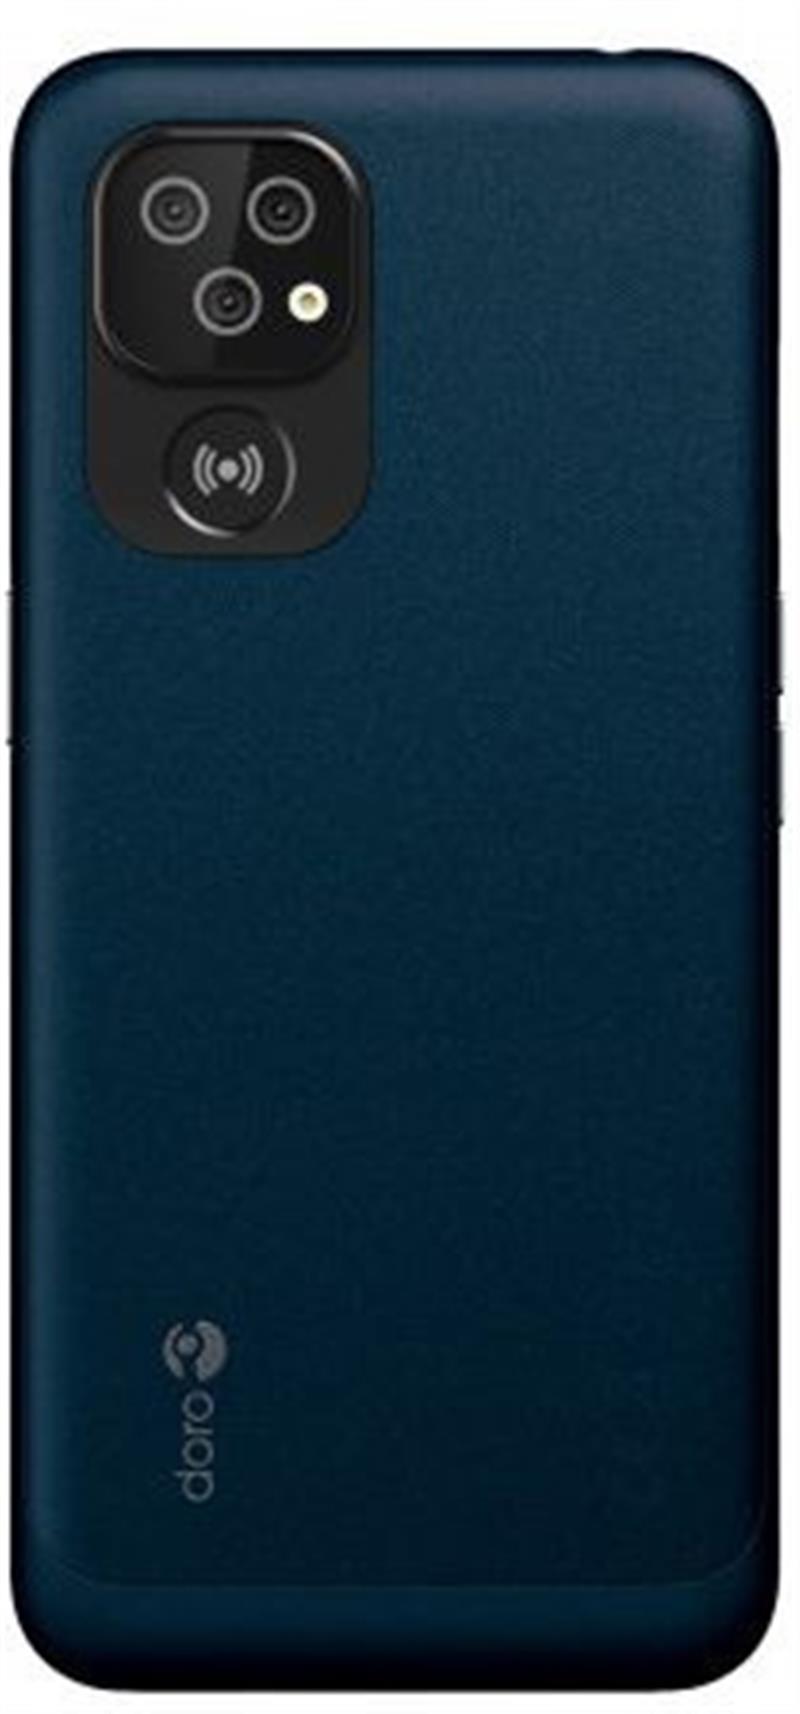 Doro 8200 4G Smartphone Blue